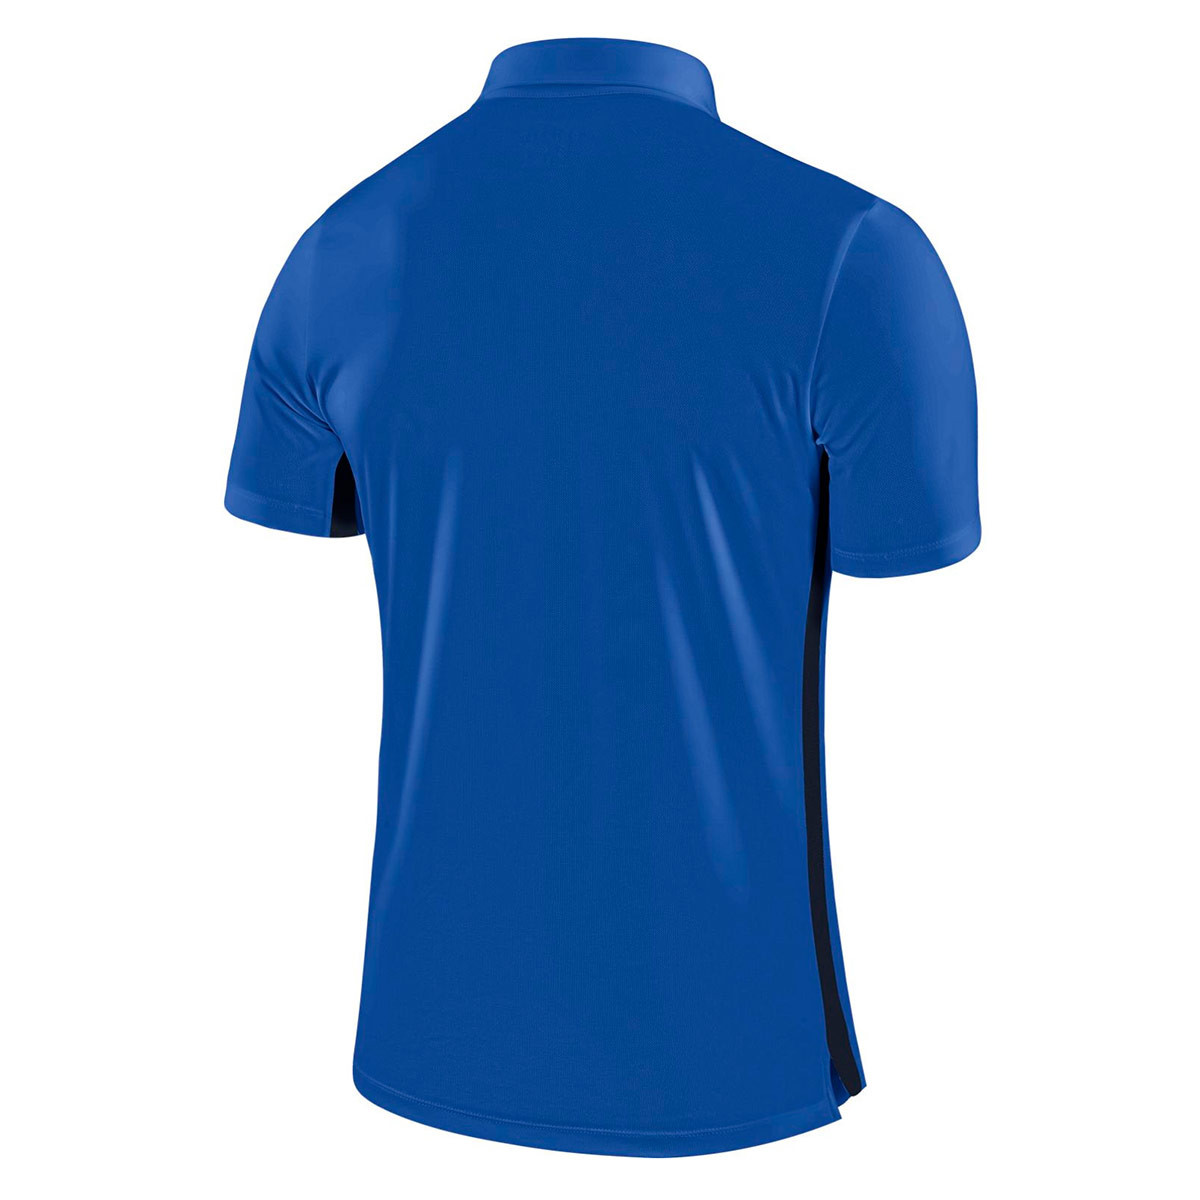 Polo shirt Nike Academy 18 m/c Royal Blue-Obsidian-White - Fútbol Emotion